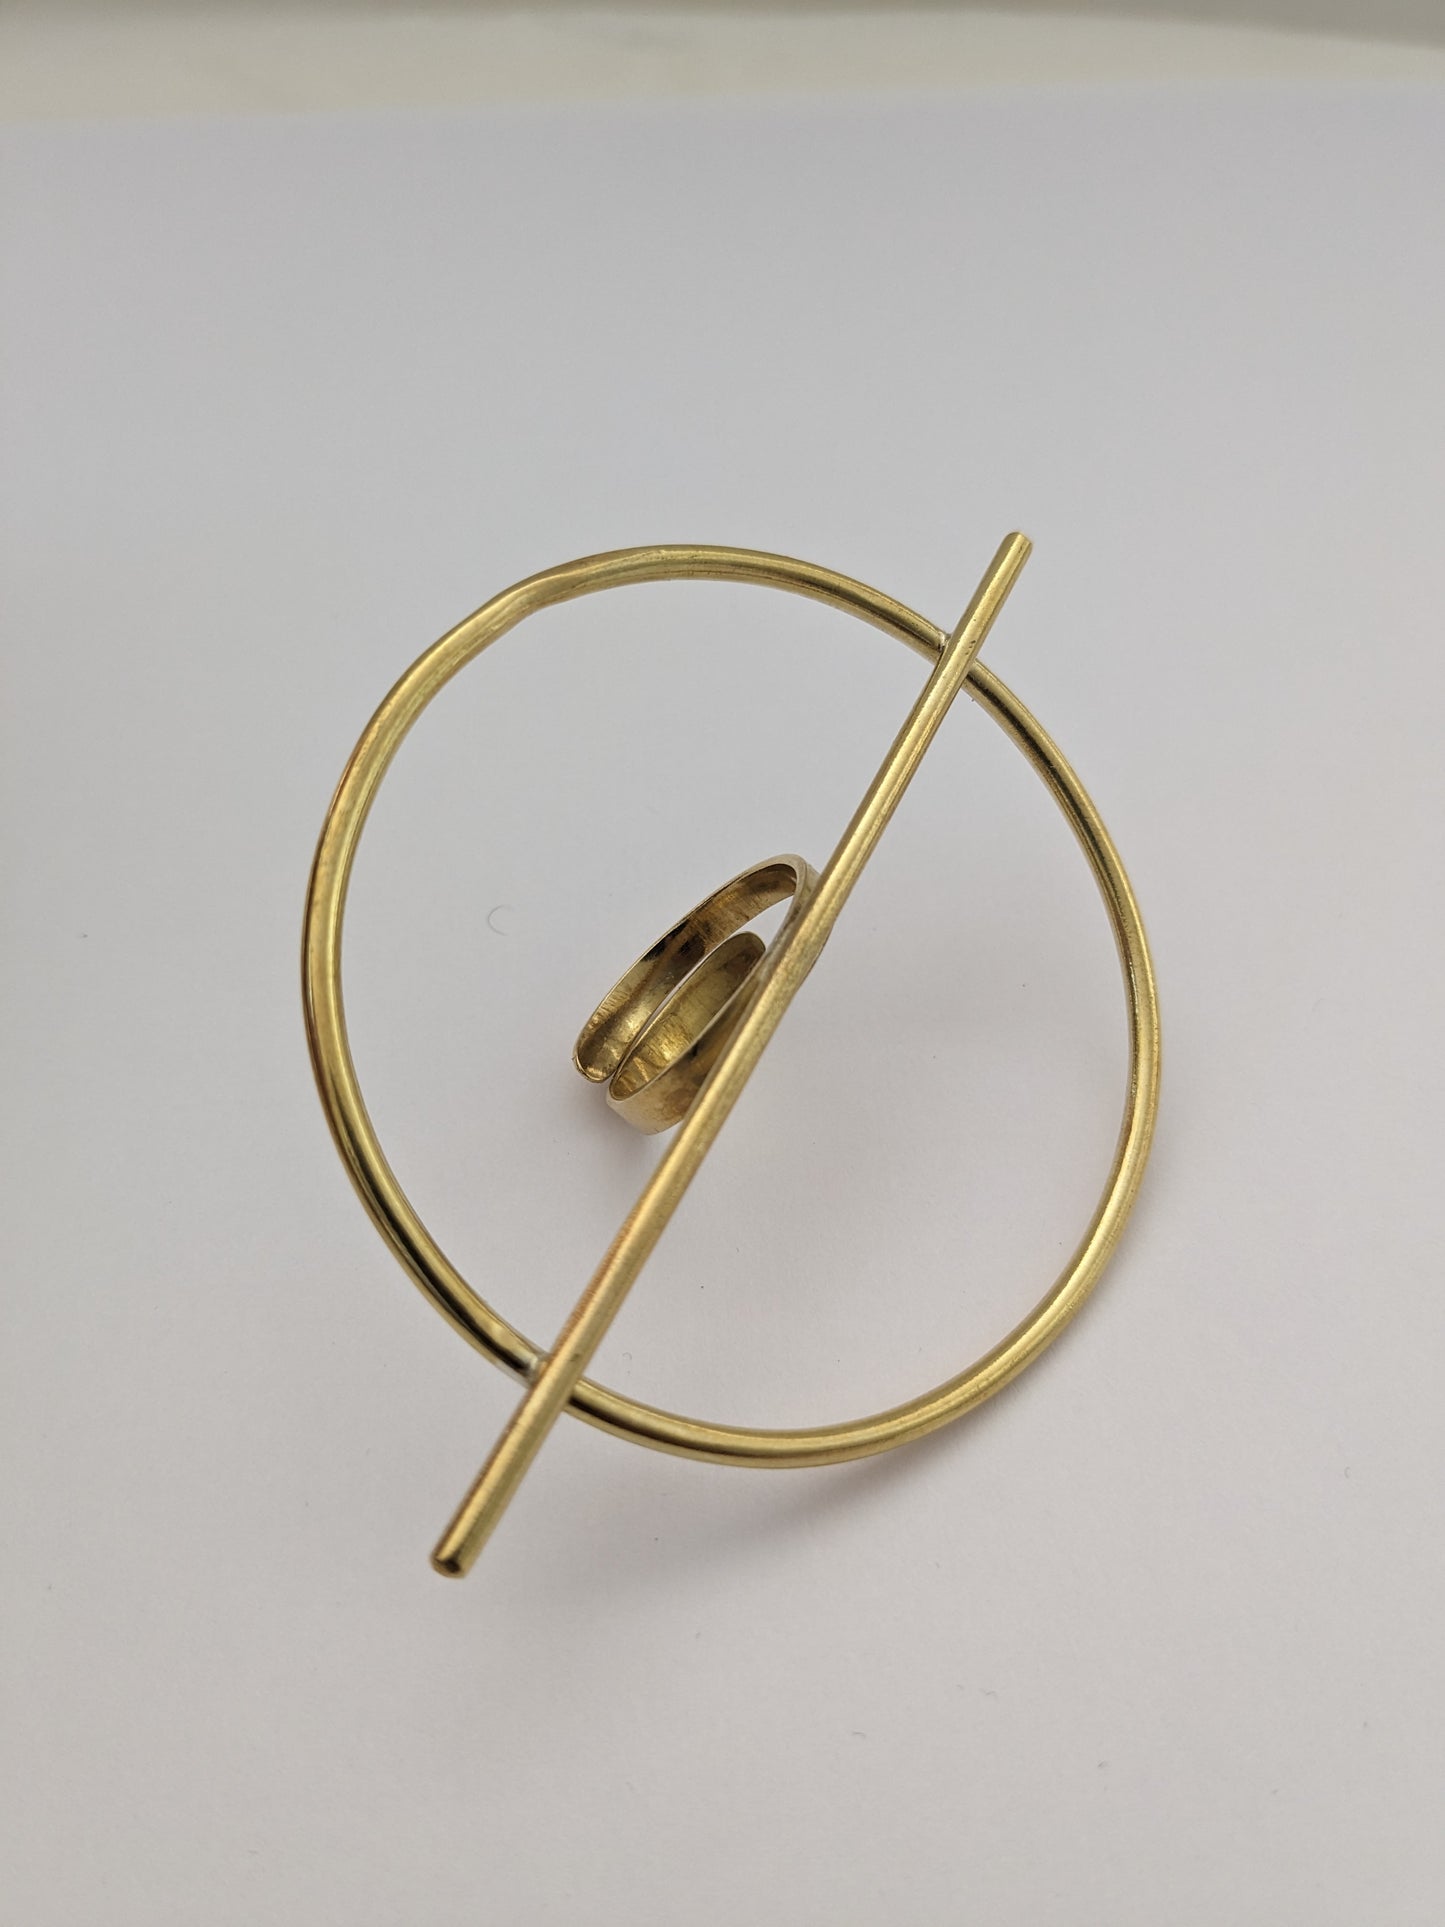 Adjustable gold statement ring